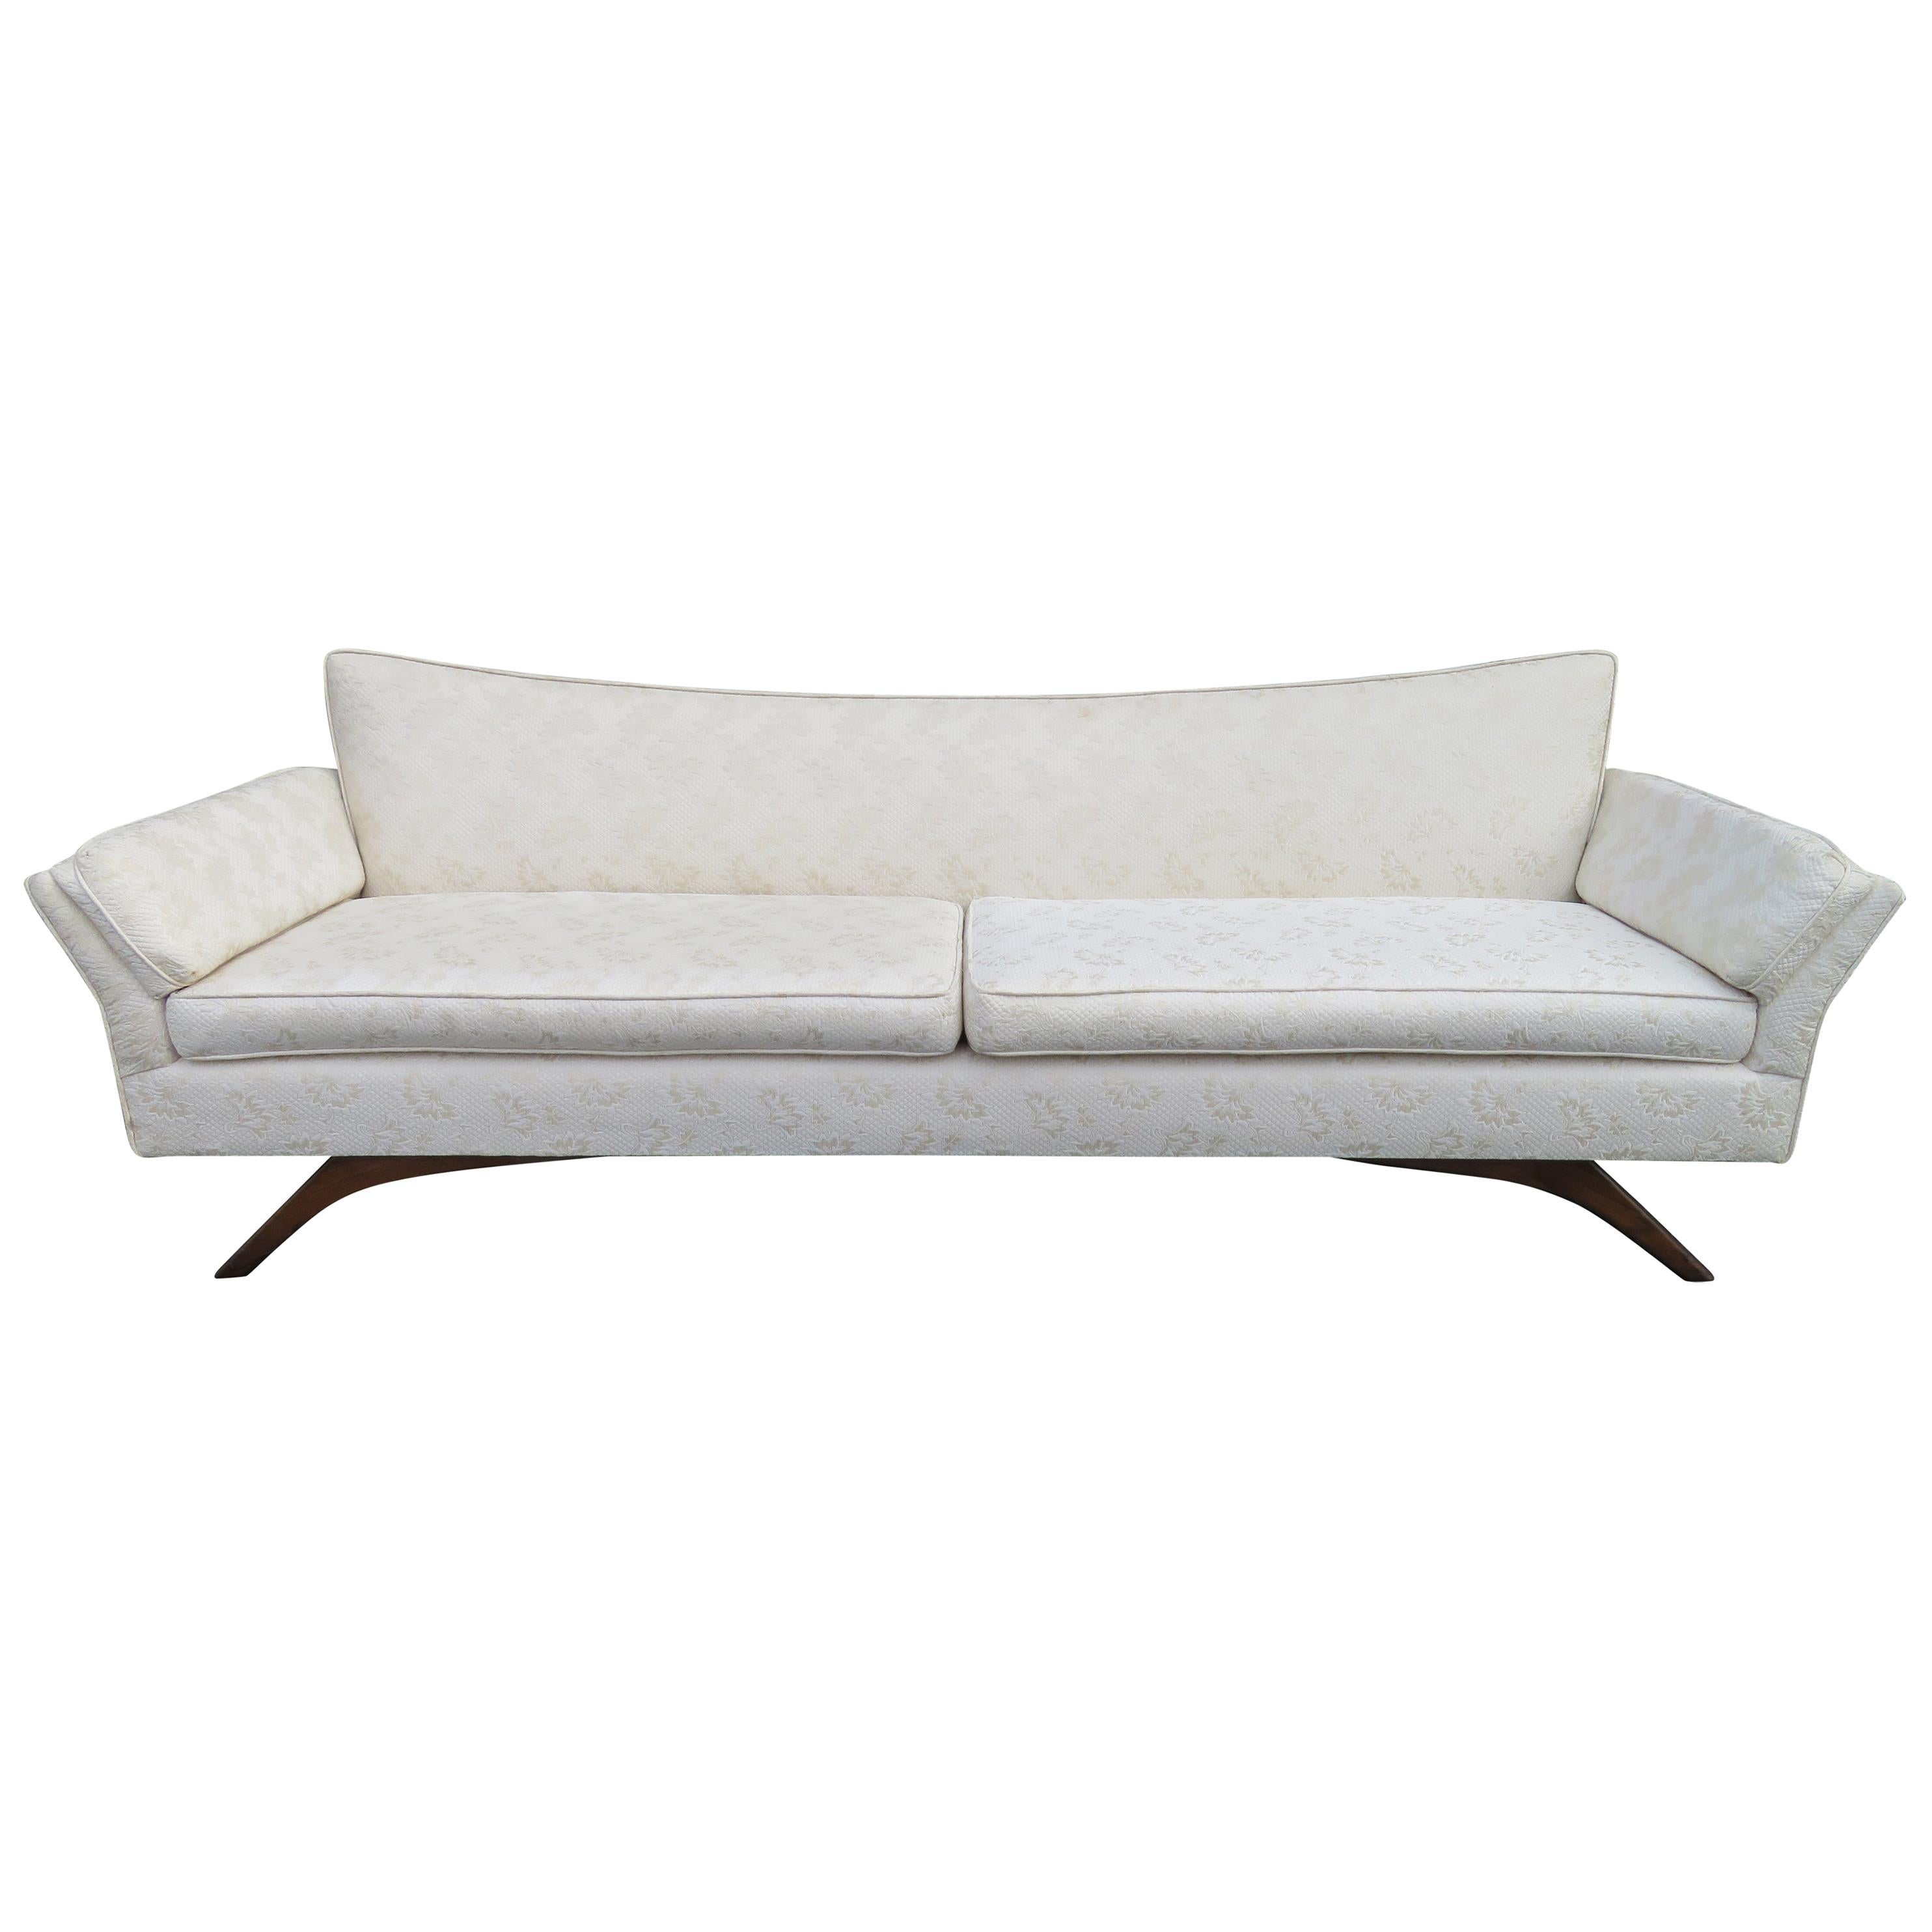 Stunning Paul McCobb Style Bowtie Design Sofa Splayed Leg Midcentury